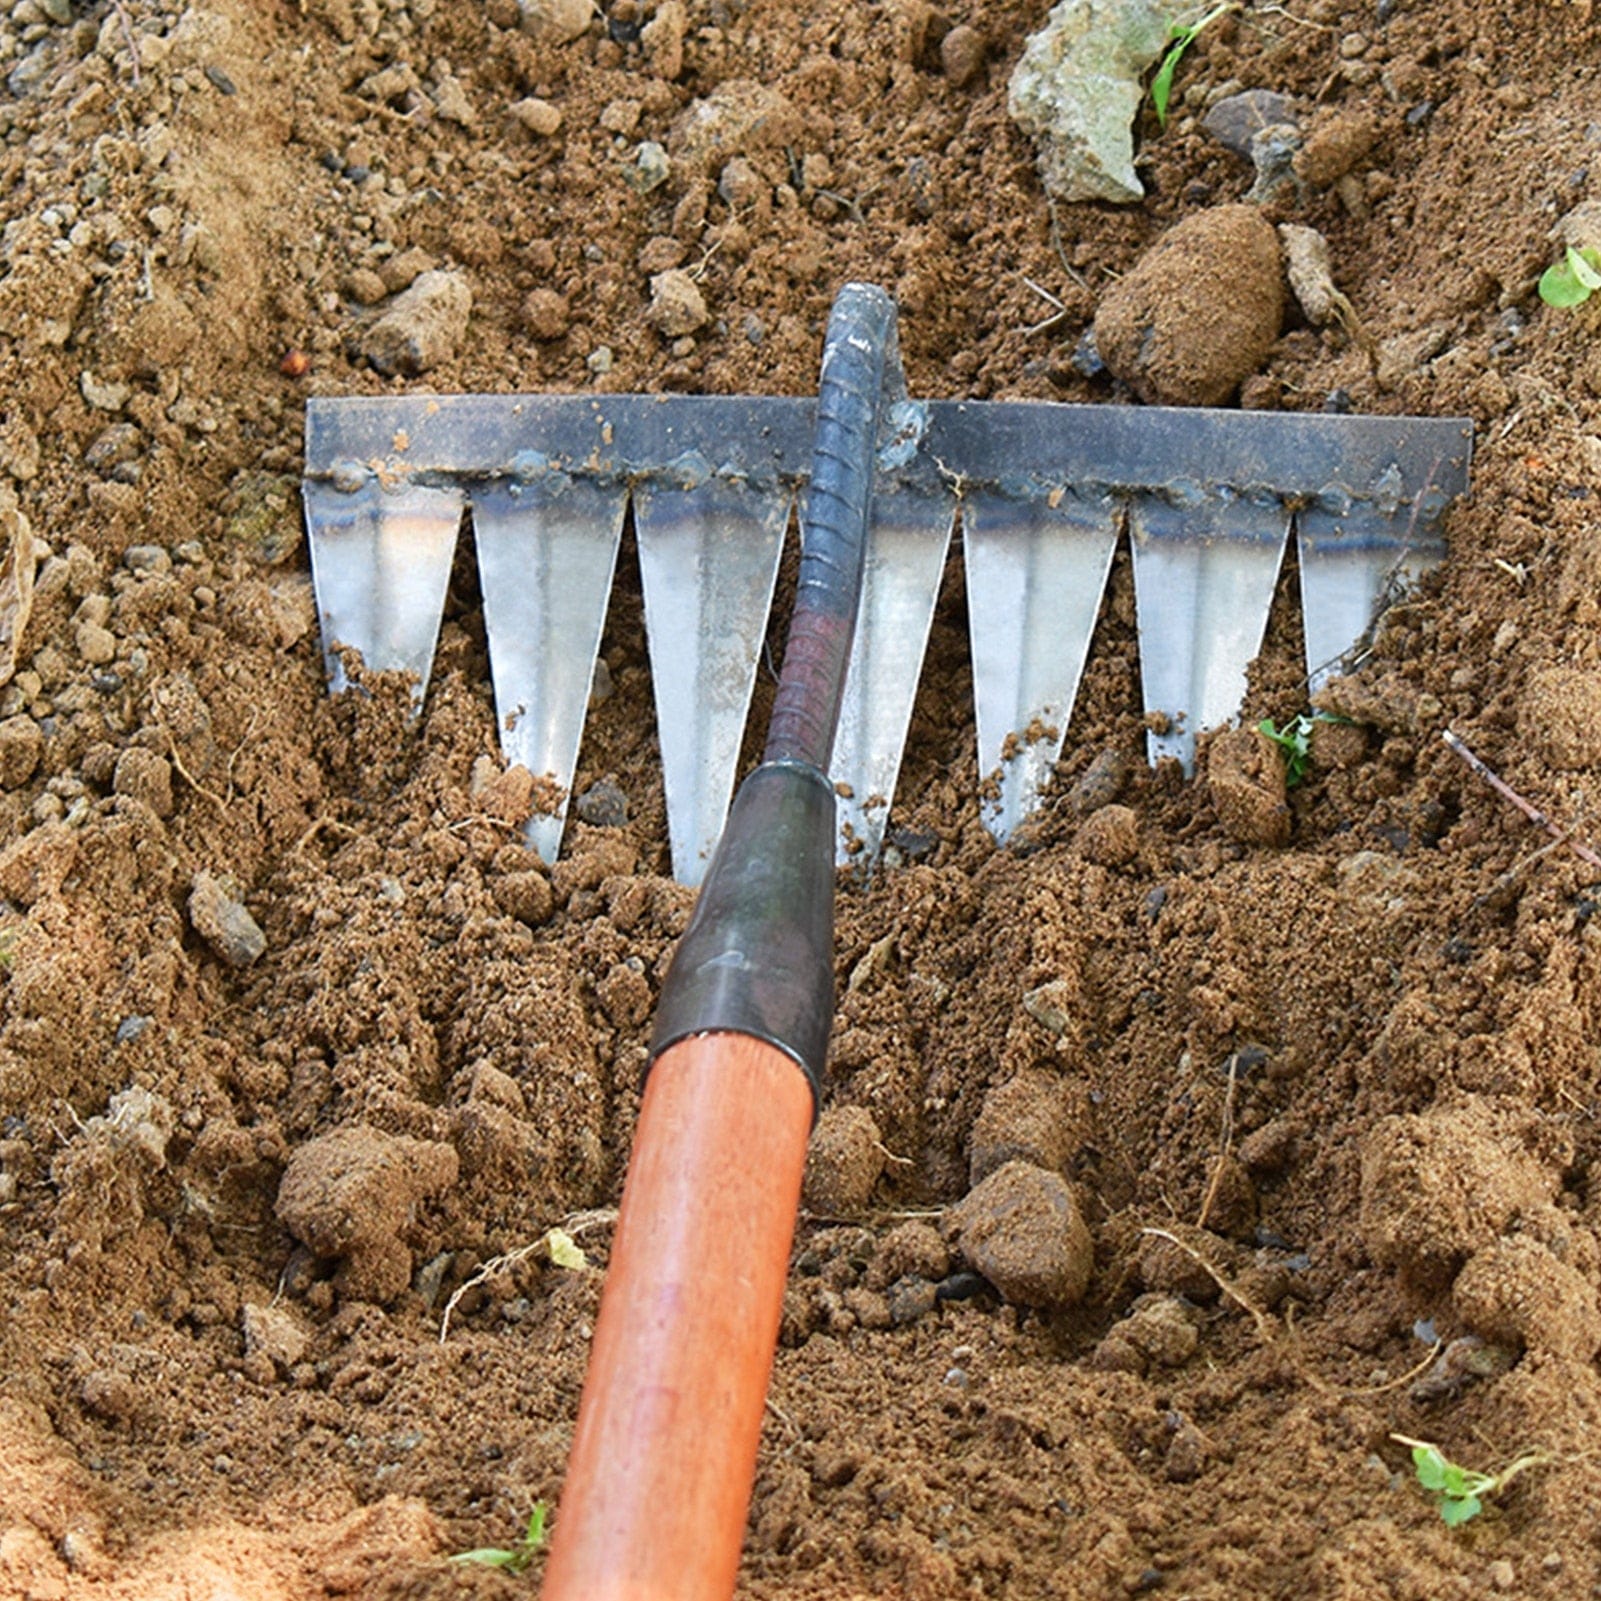 Metal Hand Rakes For Gardening, Weeding - Heavy Duty Metal Tine Rake, Dethatching,